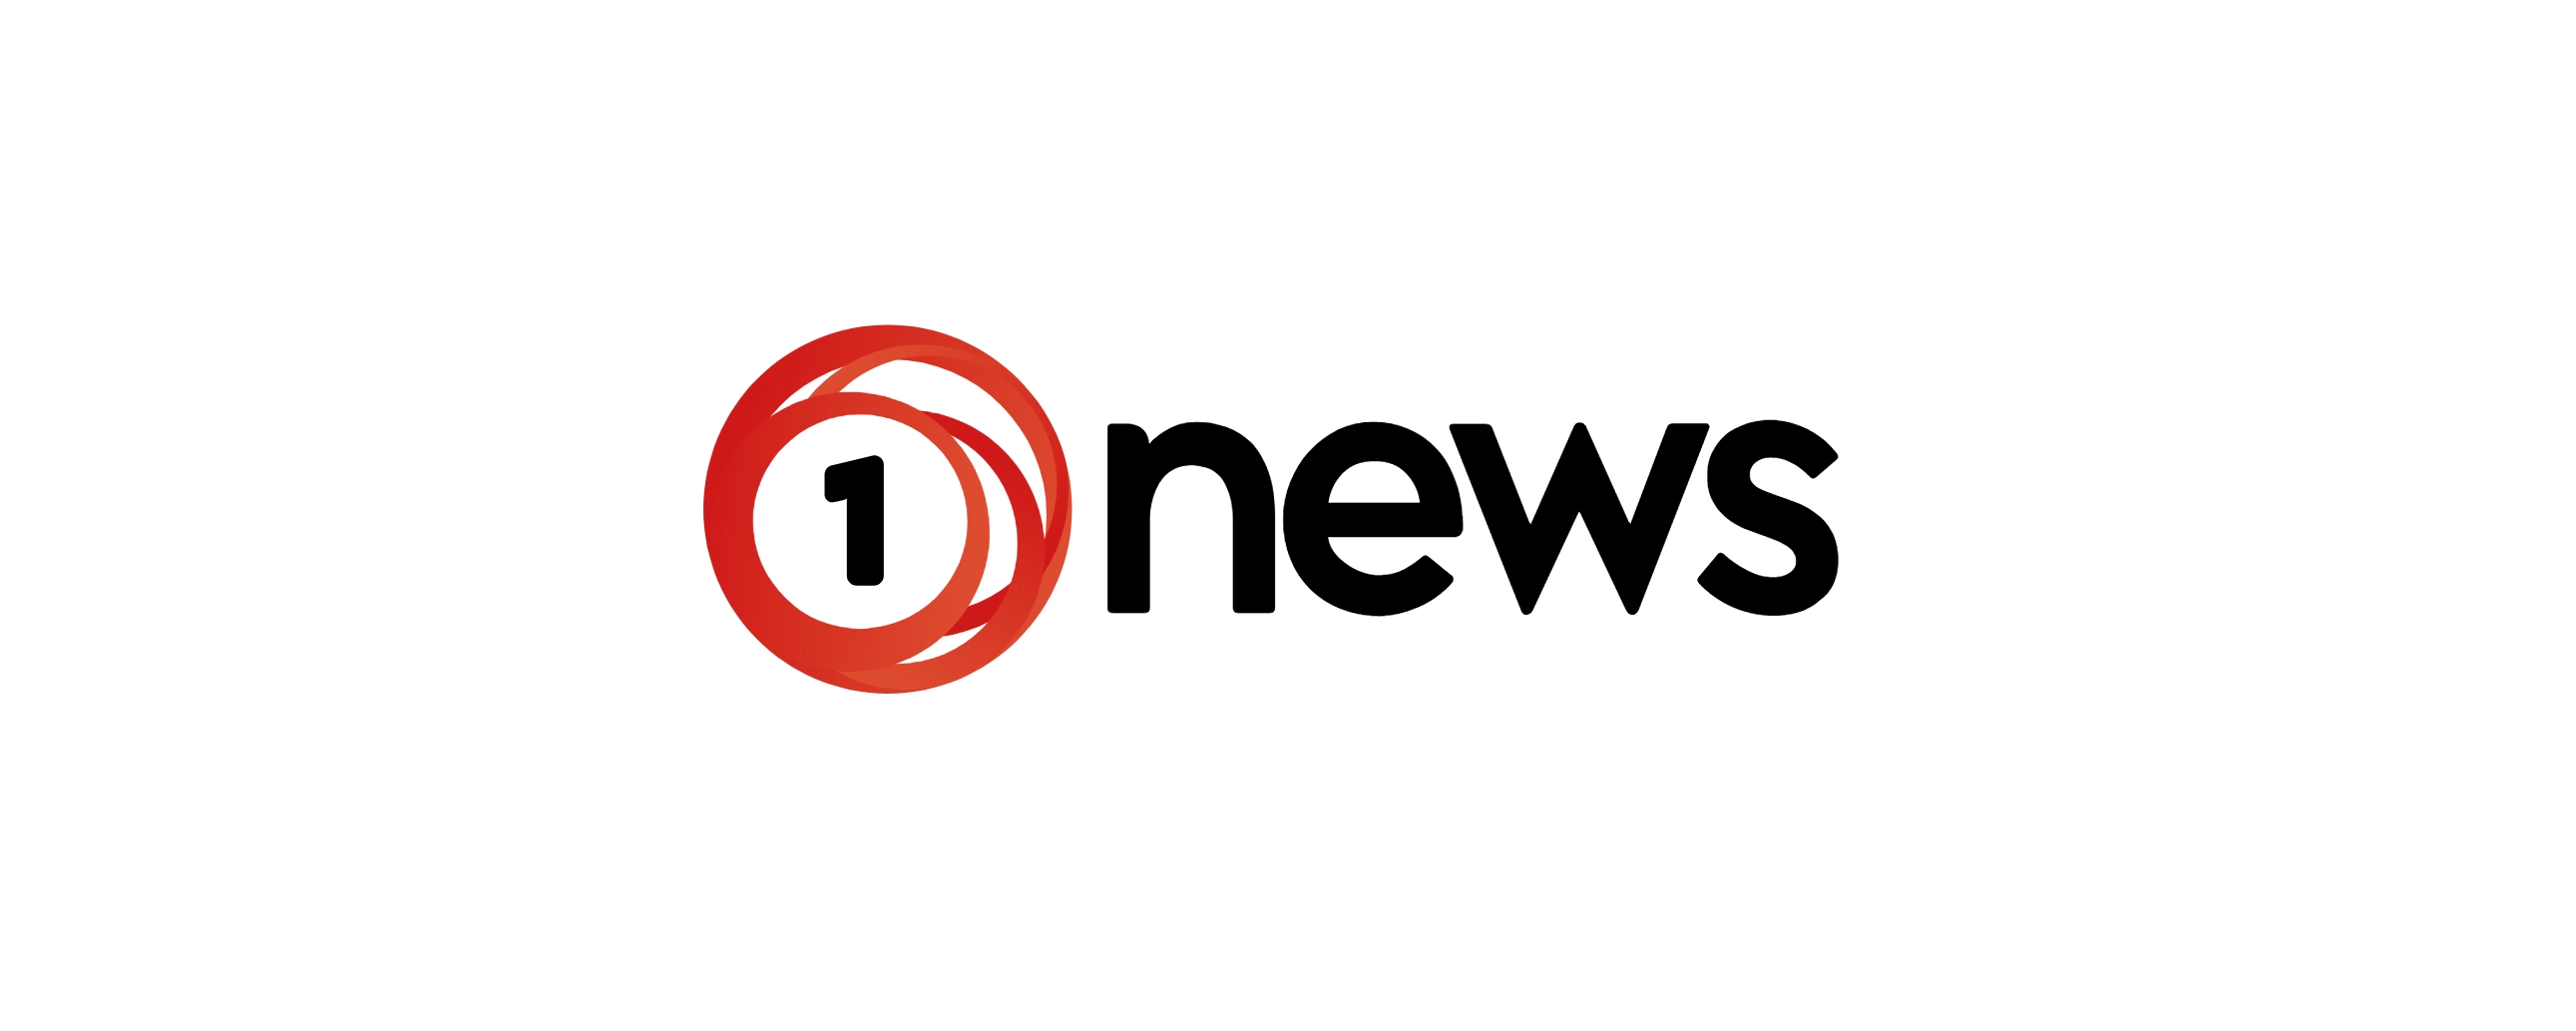 1 news logo